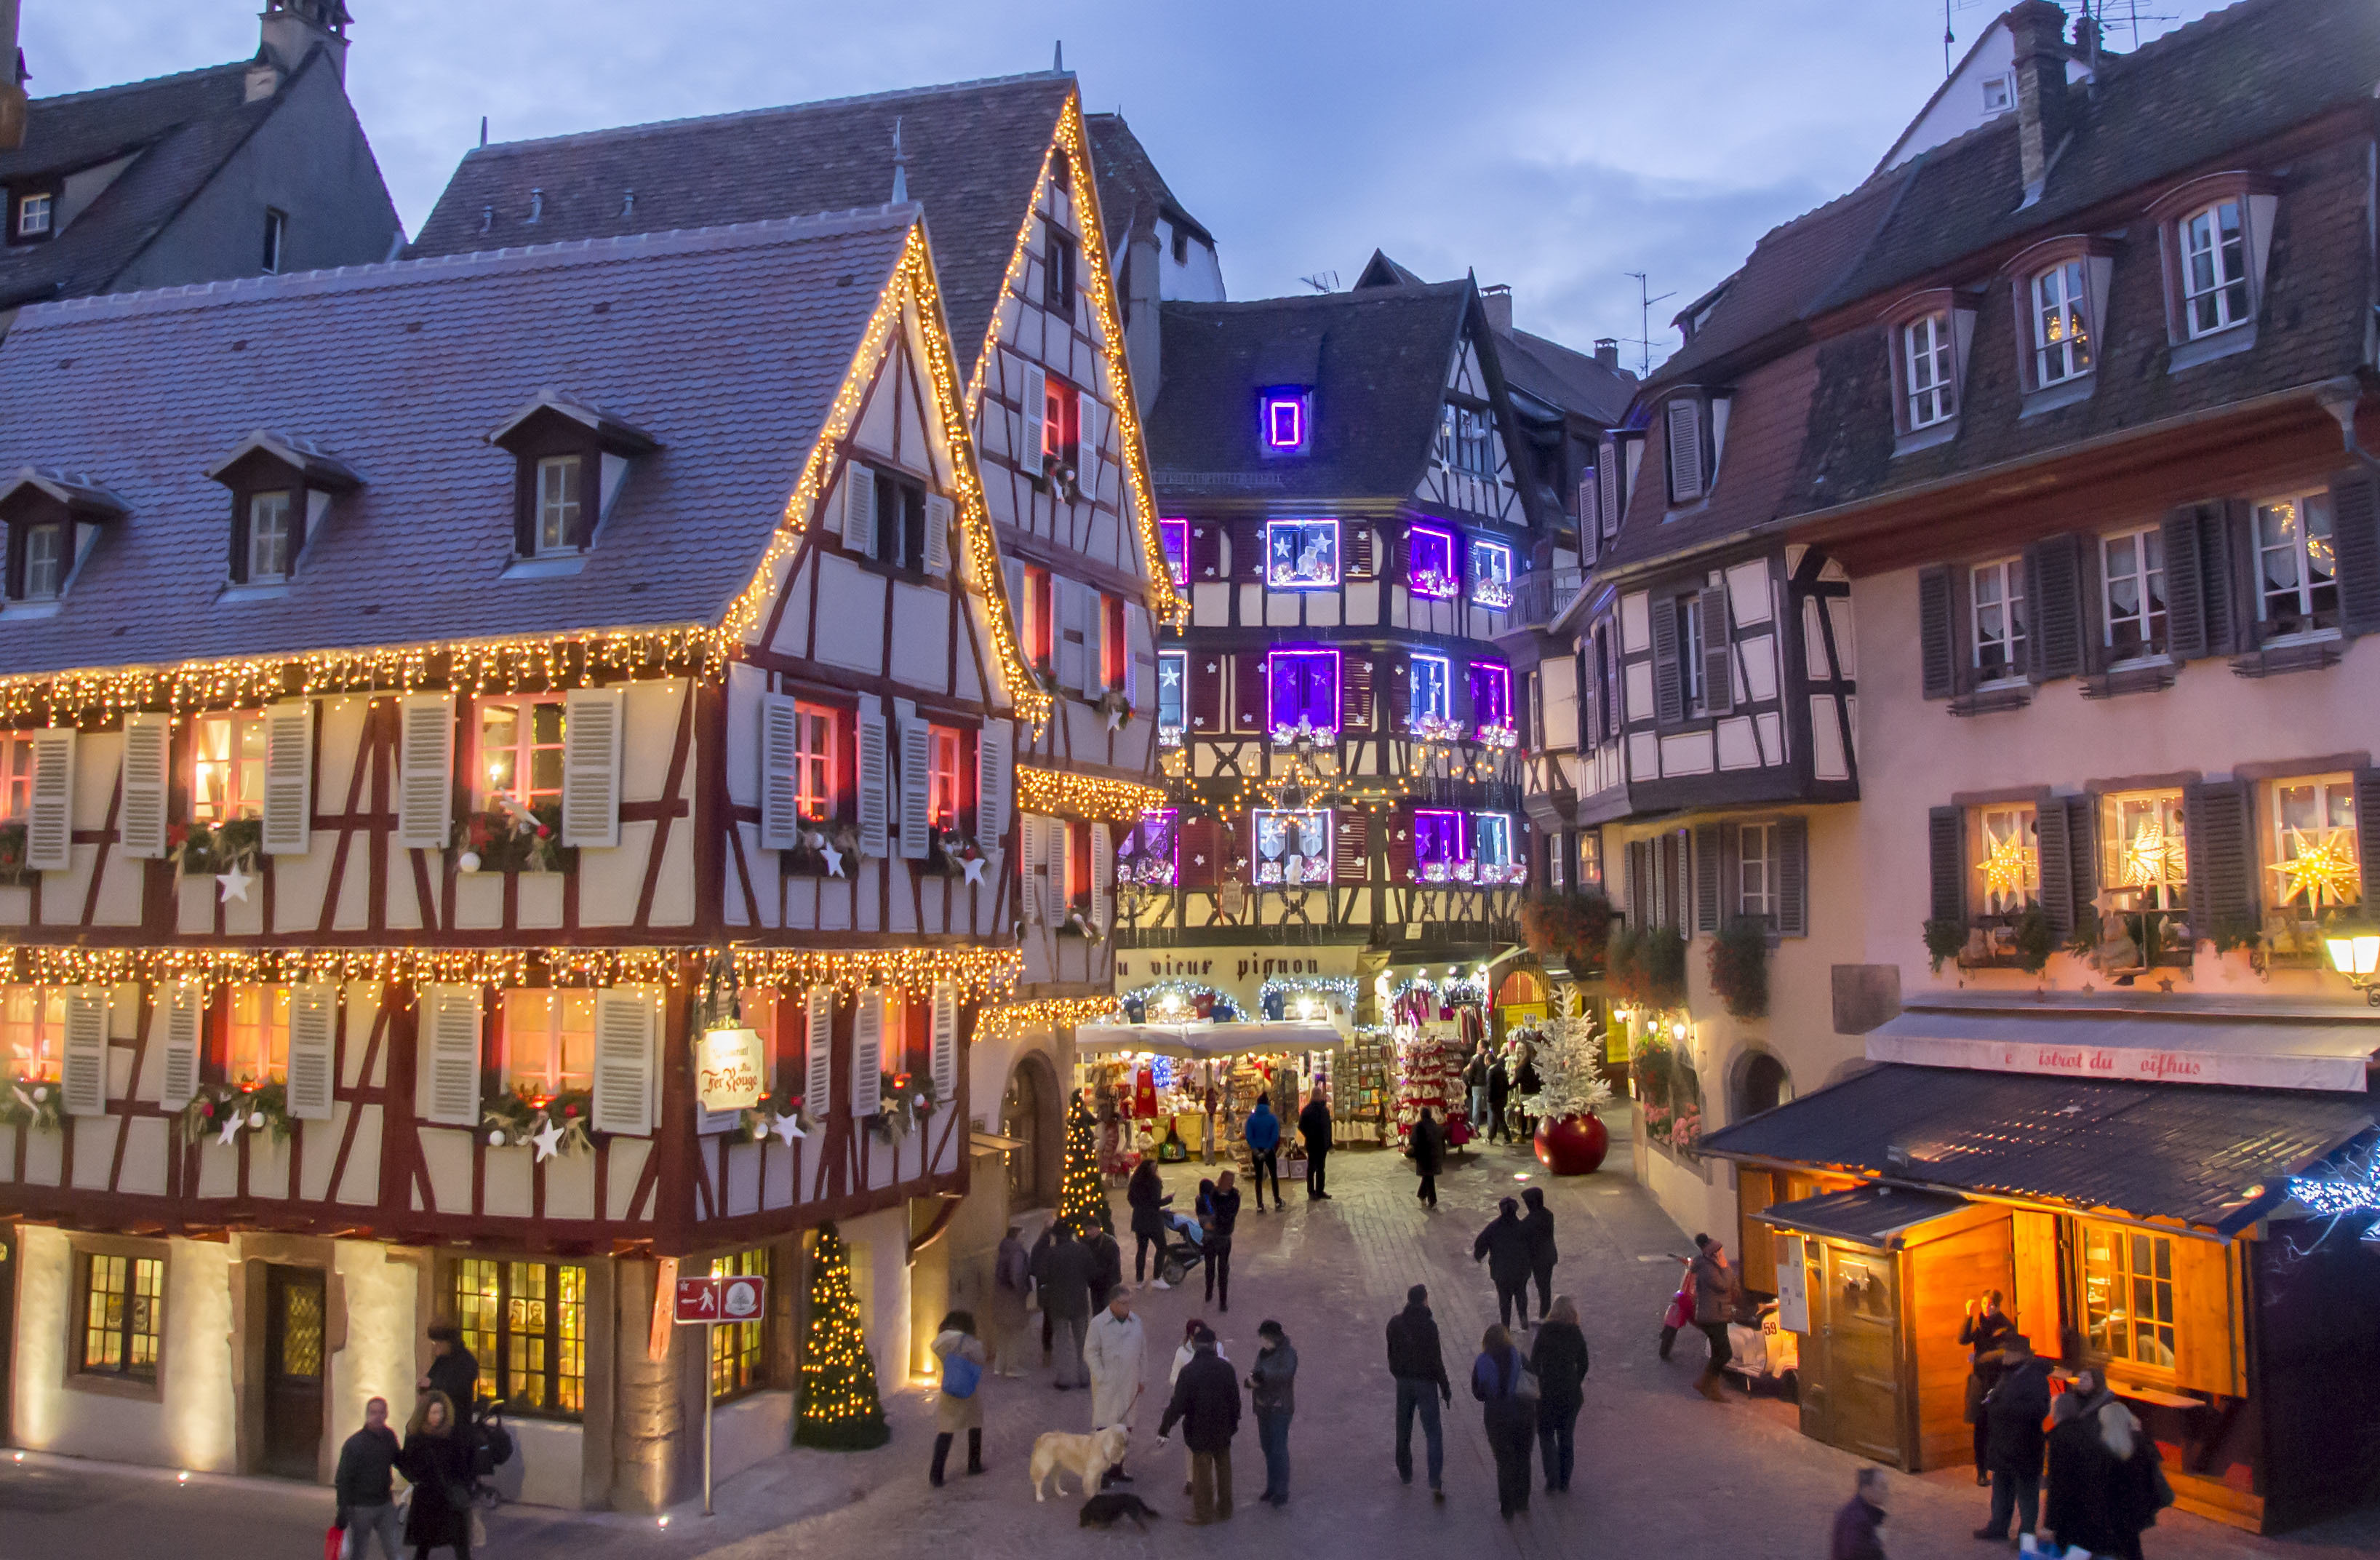 Le marché de Noël de Colmar en Alsace